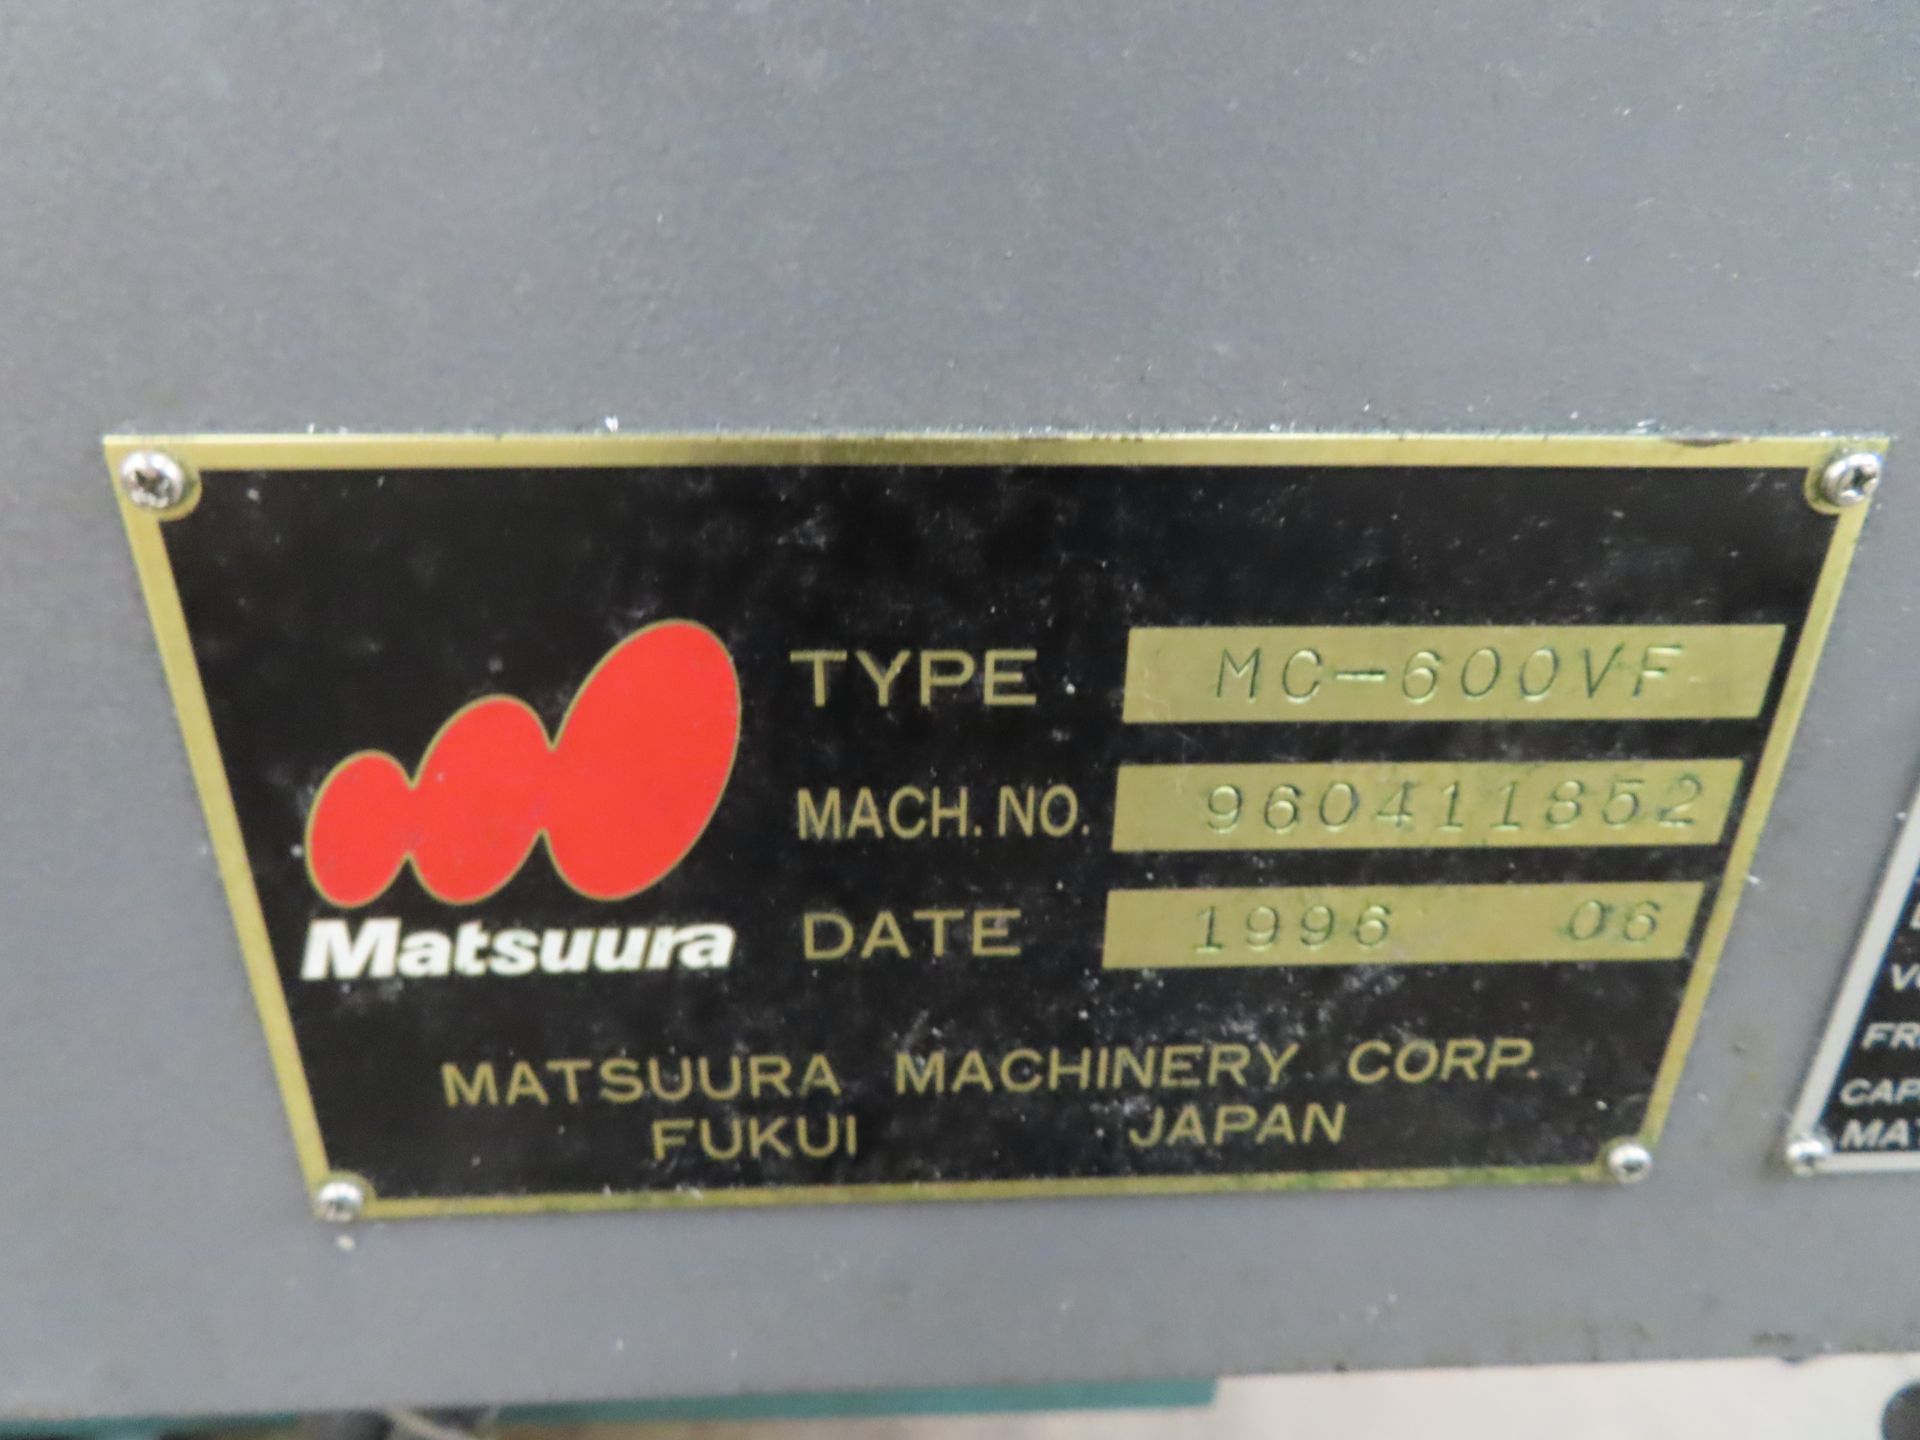 1996 Matsuura MC-600VF CNC Vertical Machining Center - Image 11 of 12